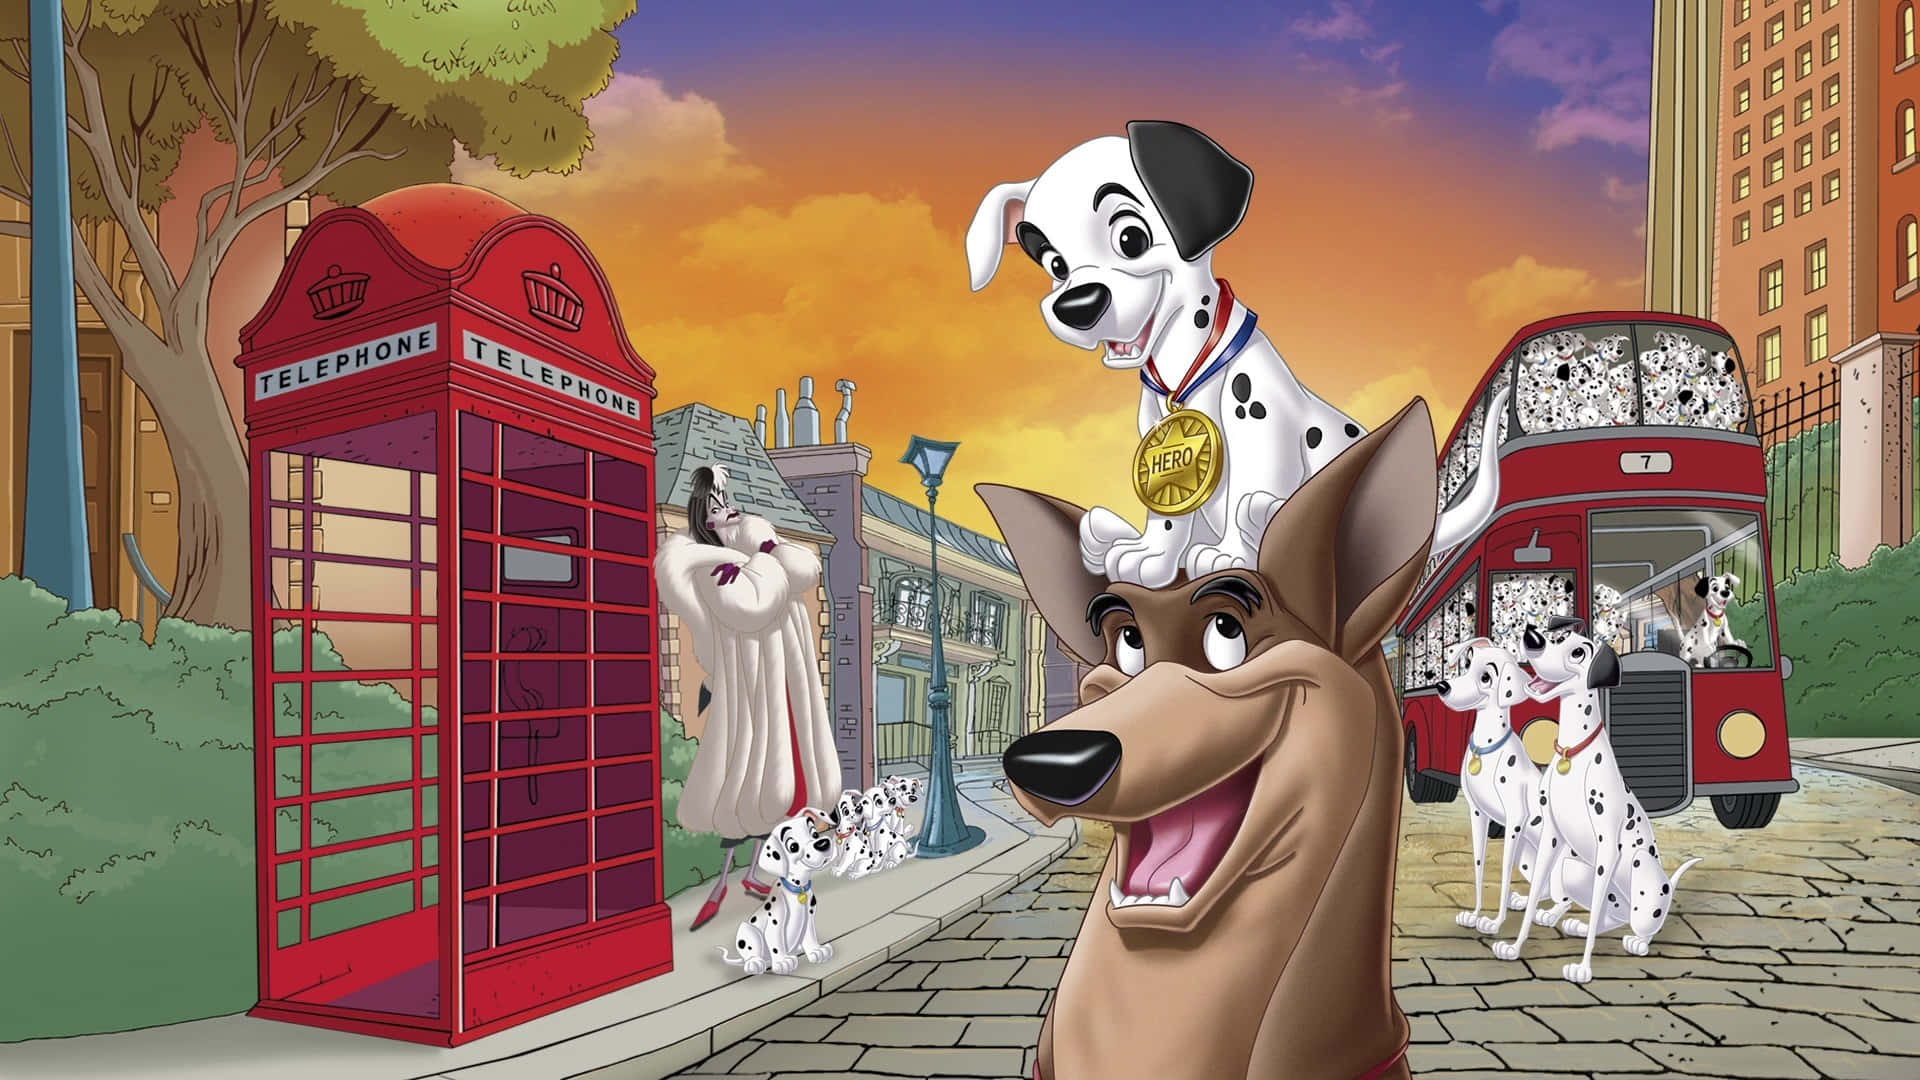 The world of Disney’s 101 Dalmatians